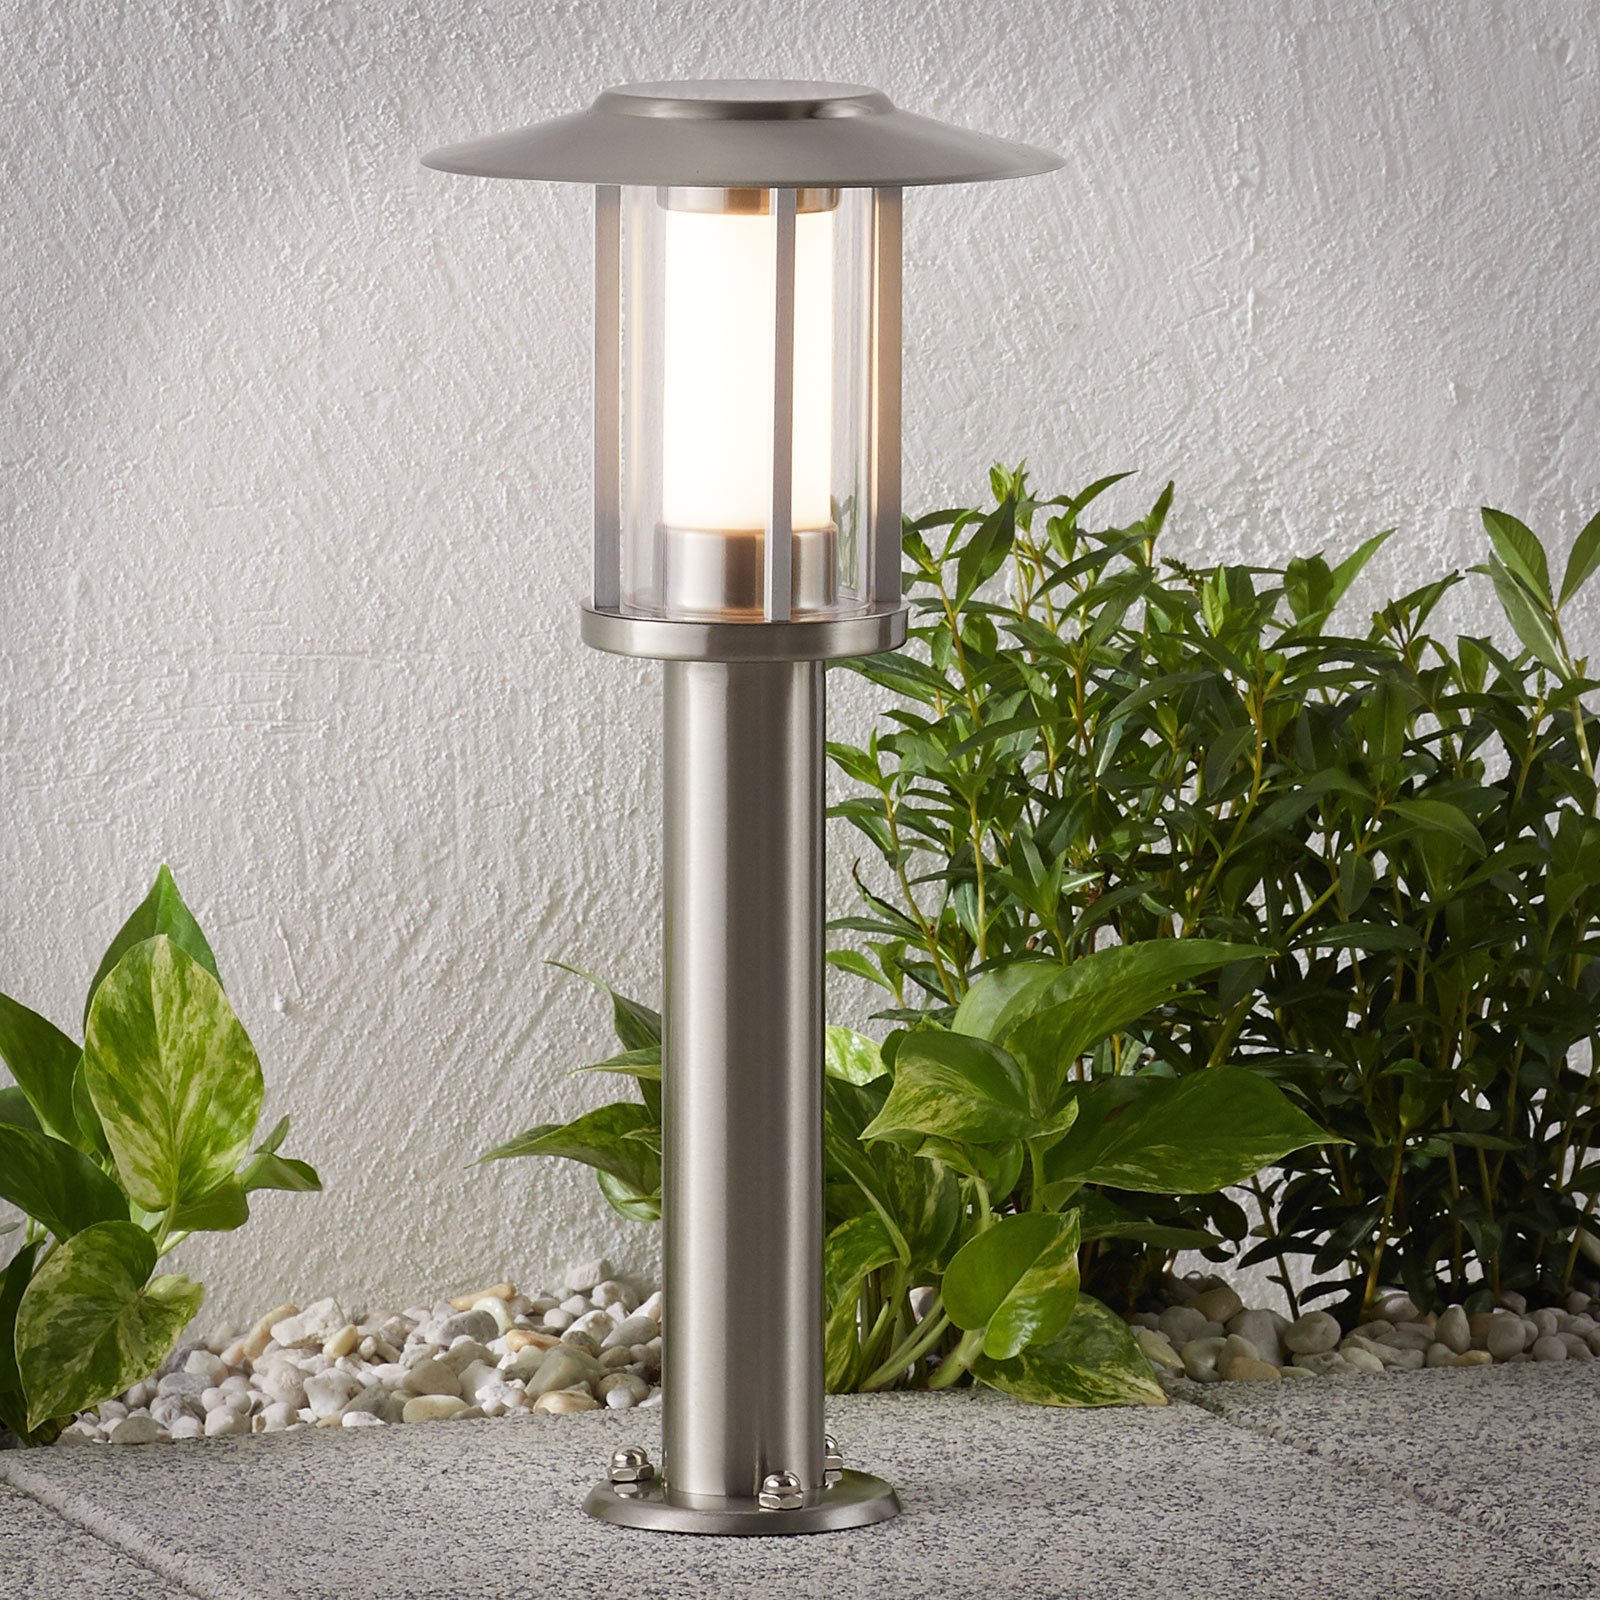 LED pillar lamp Gregory stainless steel